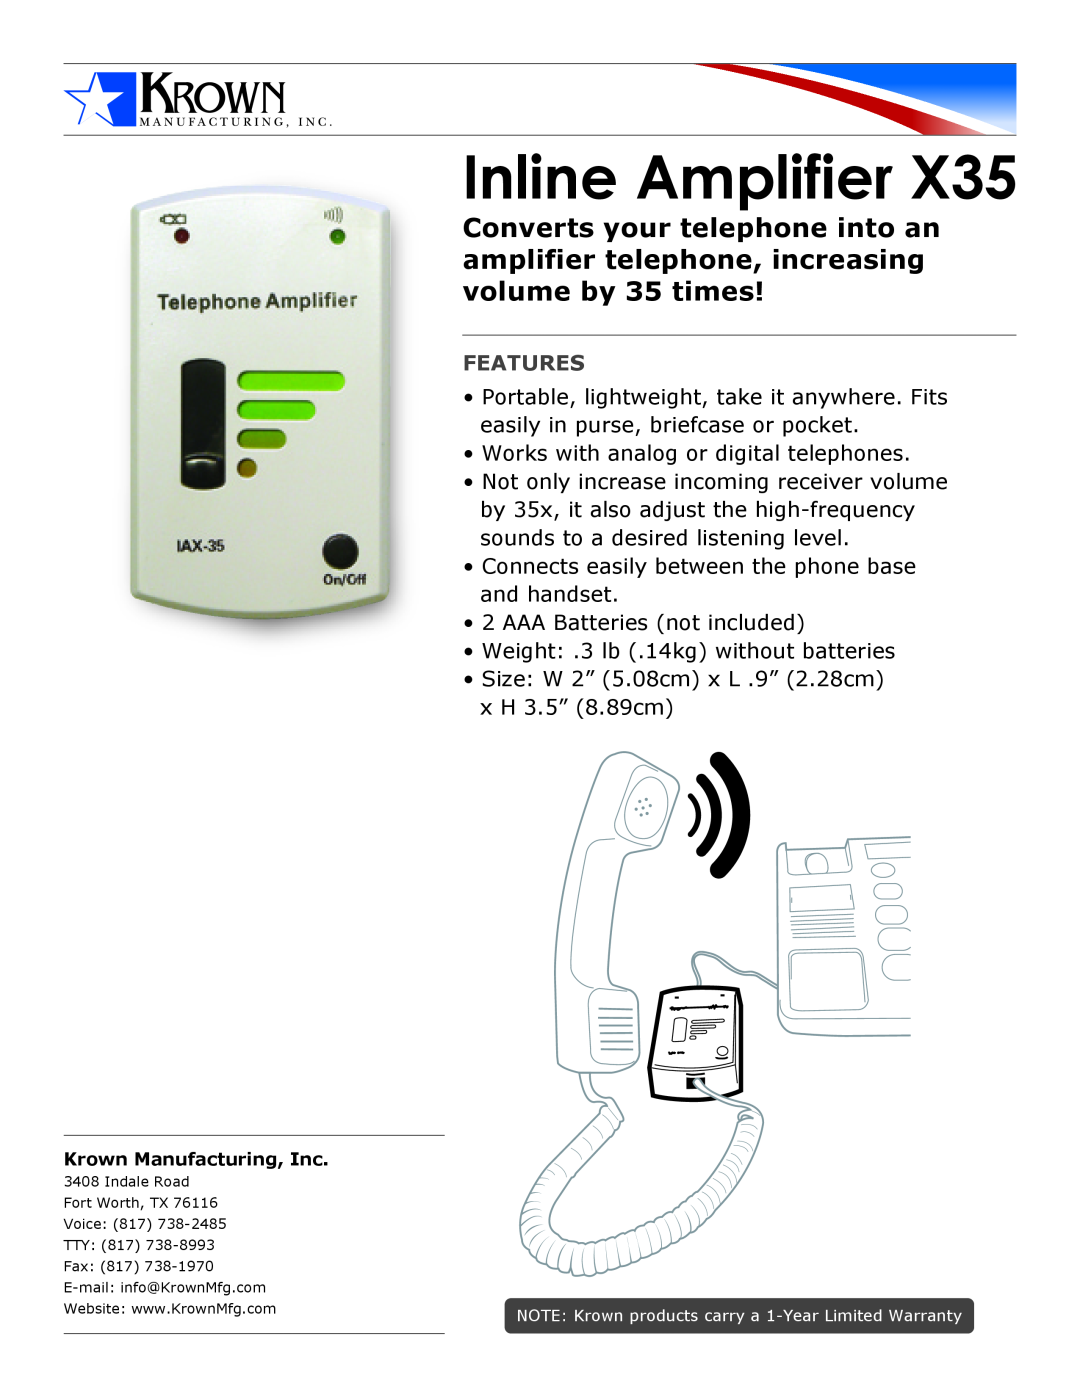 Krown Manufacturing X35 warranty Inline Amplifier, Features 